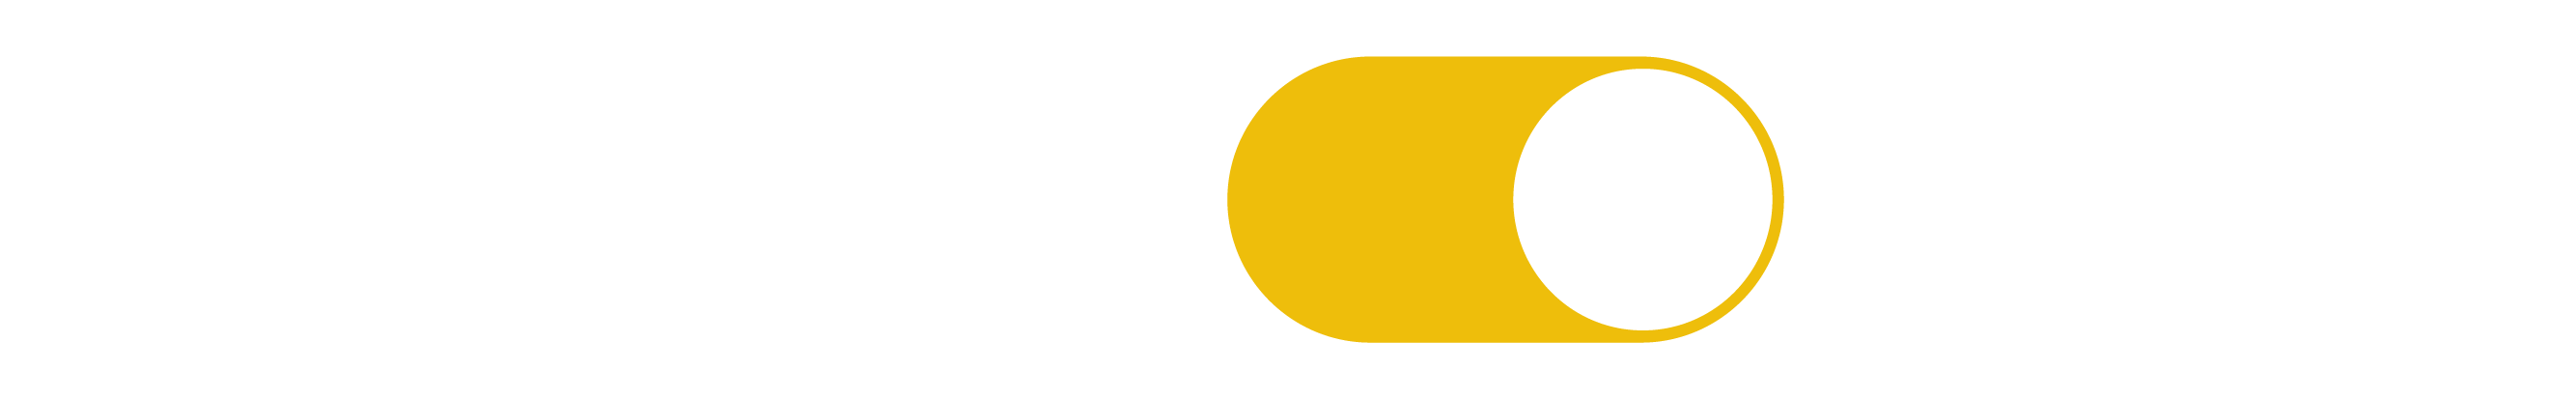 DASHBOARD Agency logotype